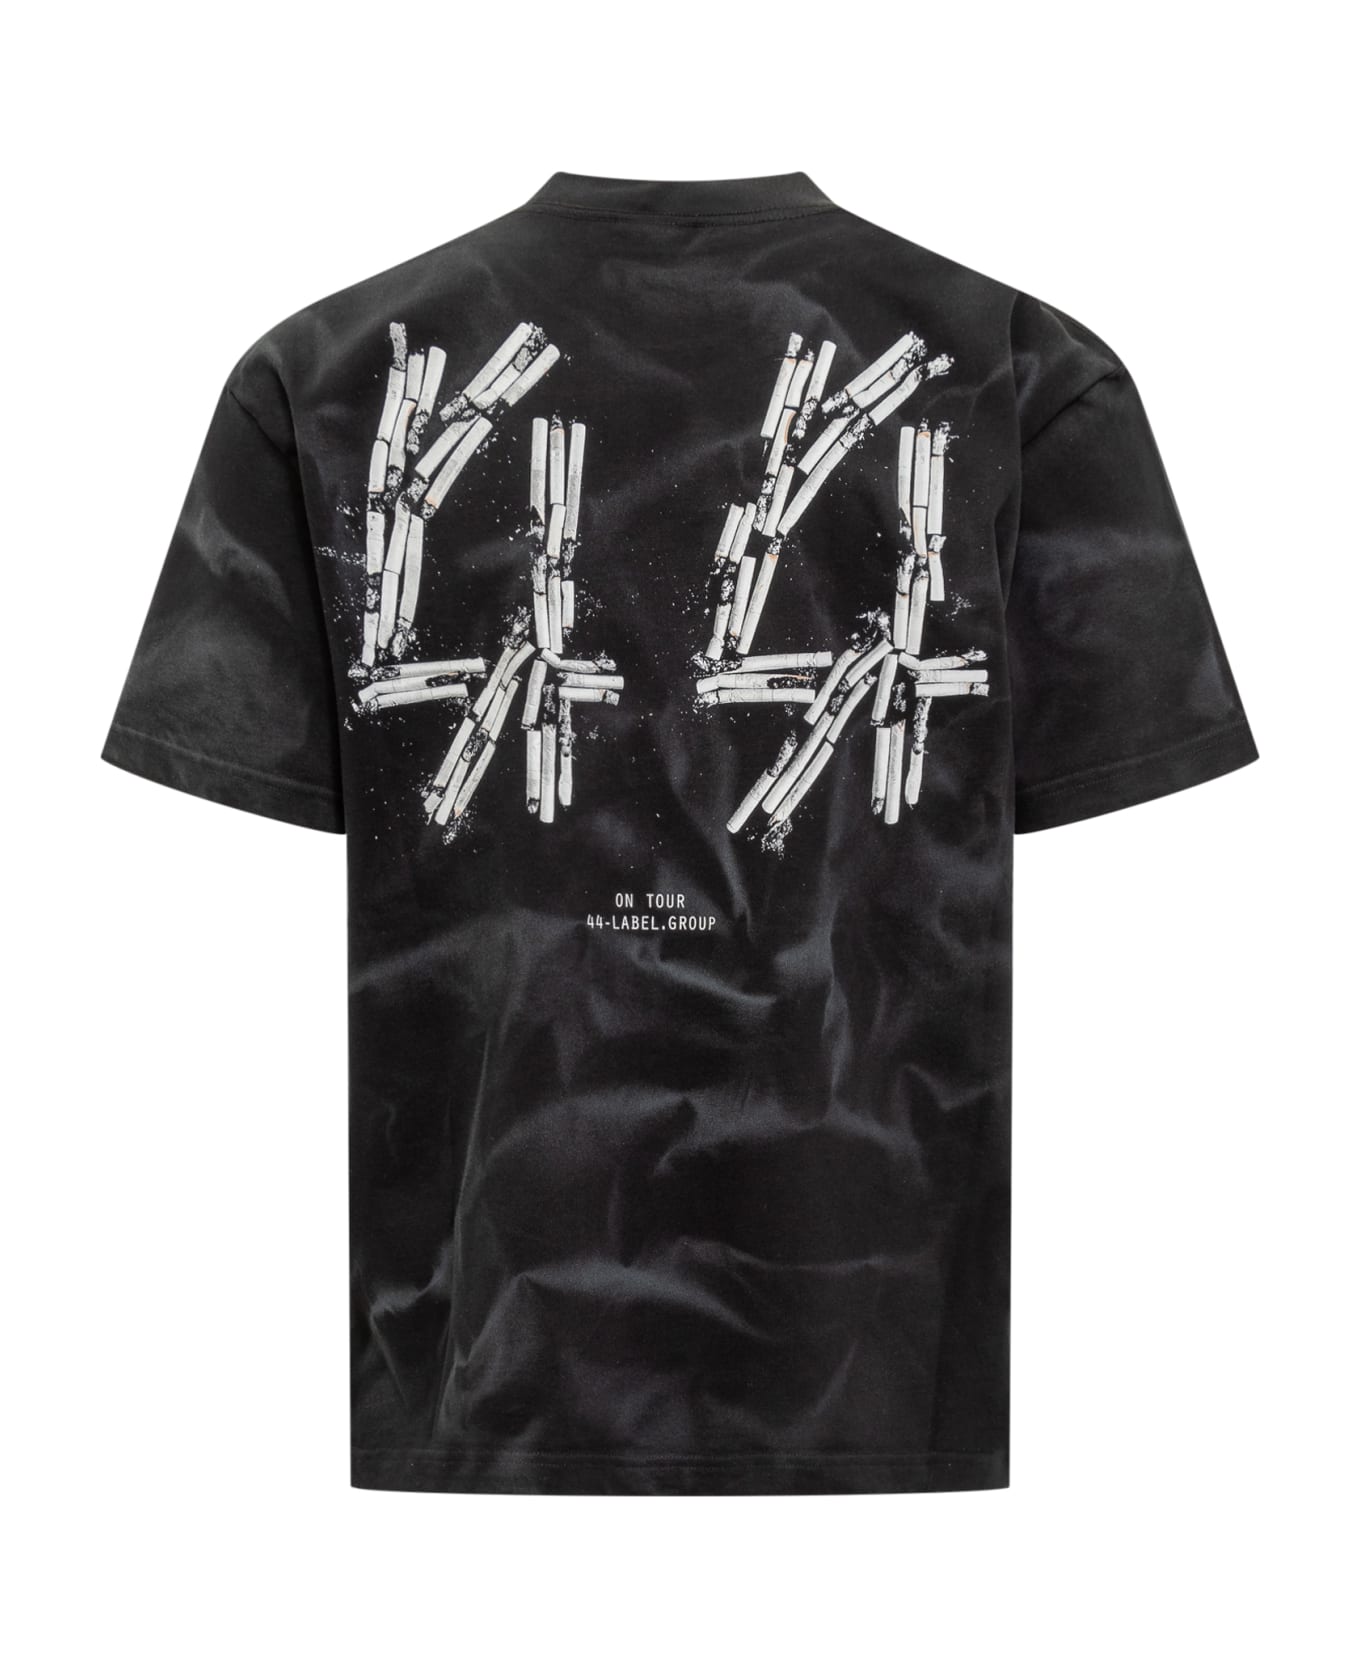 44 Label Group T-shirt With Smoke Effect - BLACK-SMOKE EFFECT